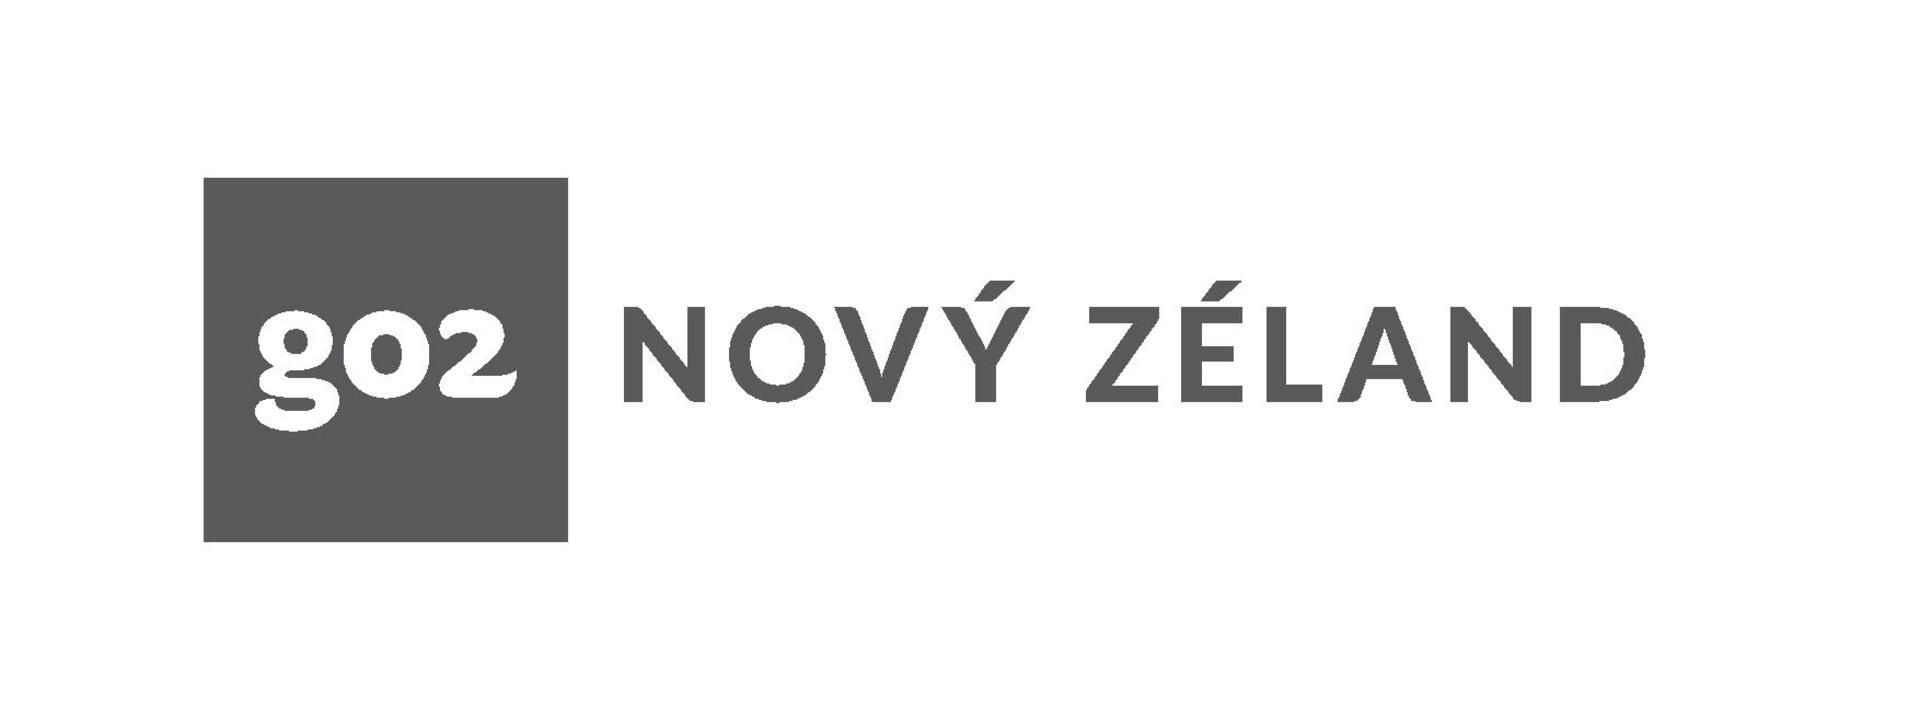 nz-logo-page-001.jpg